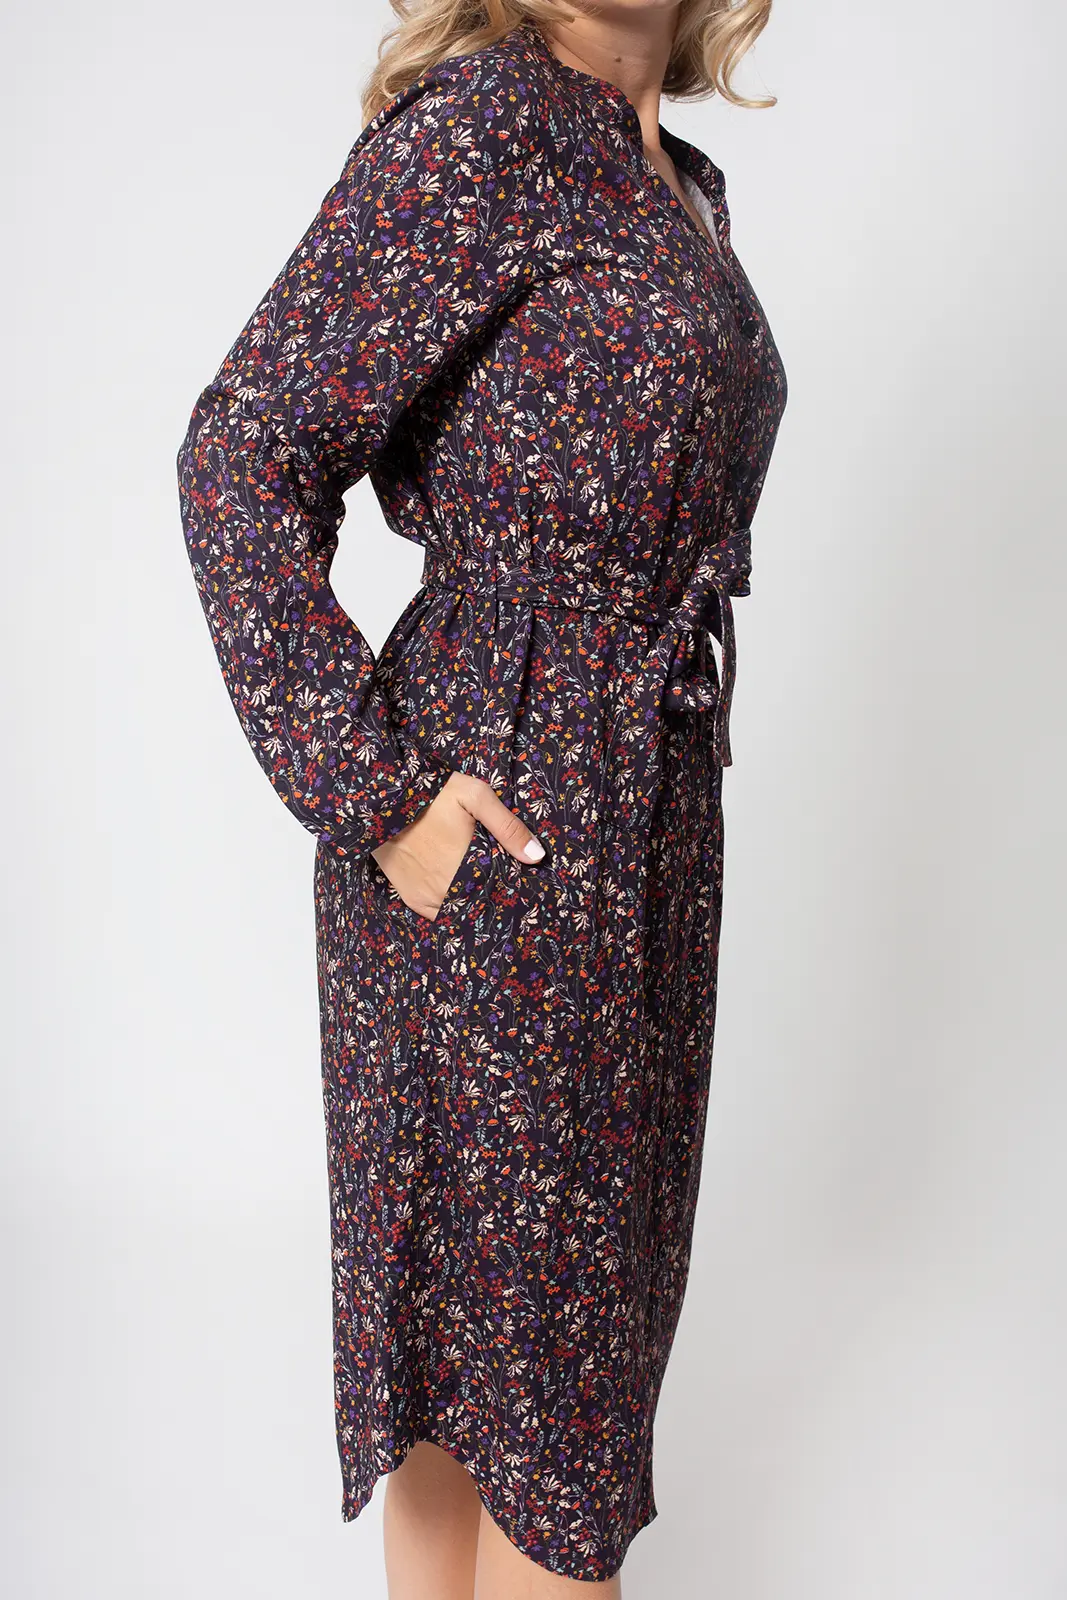 Ecovero Langarm-Kleid Modell: Finja